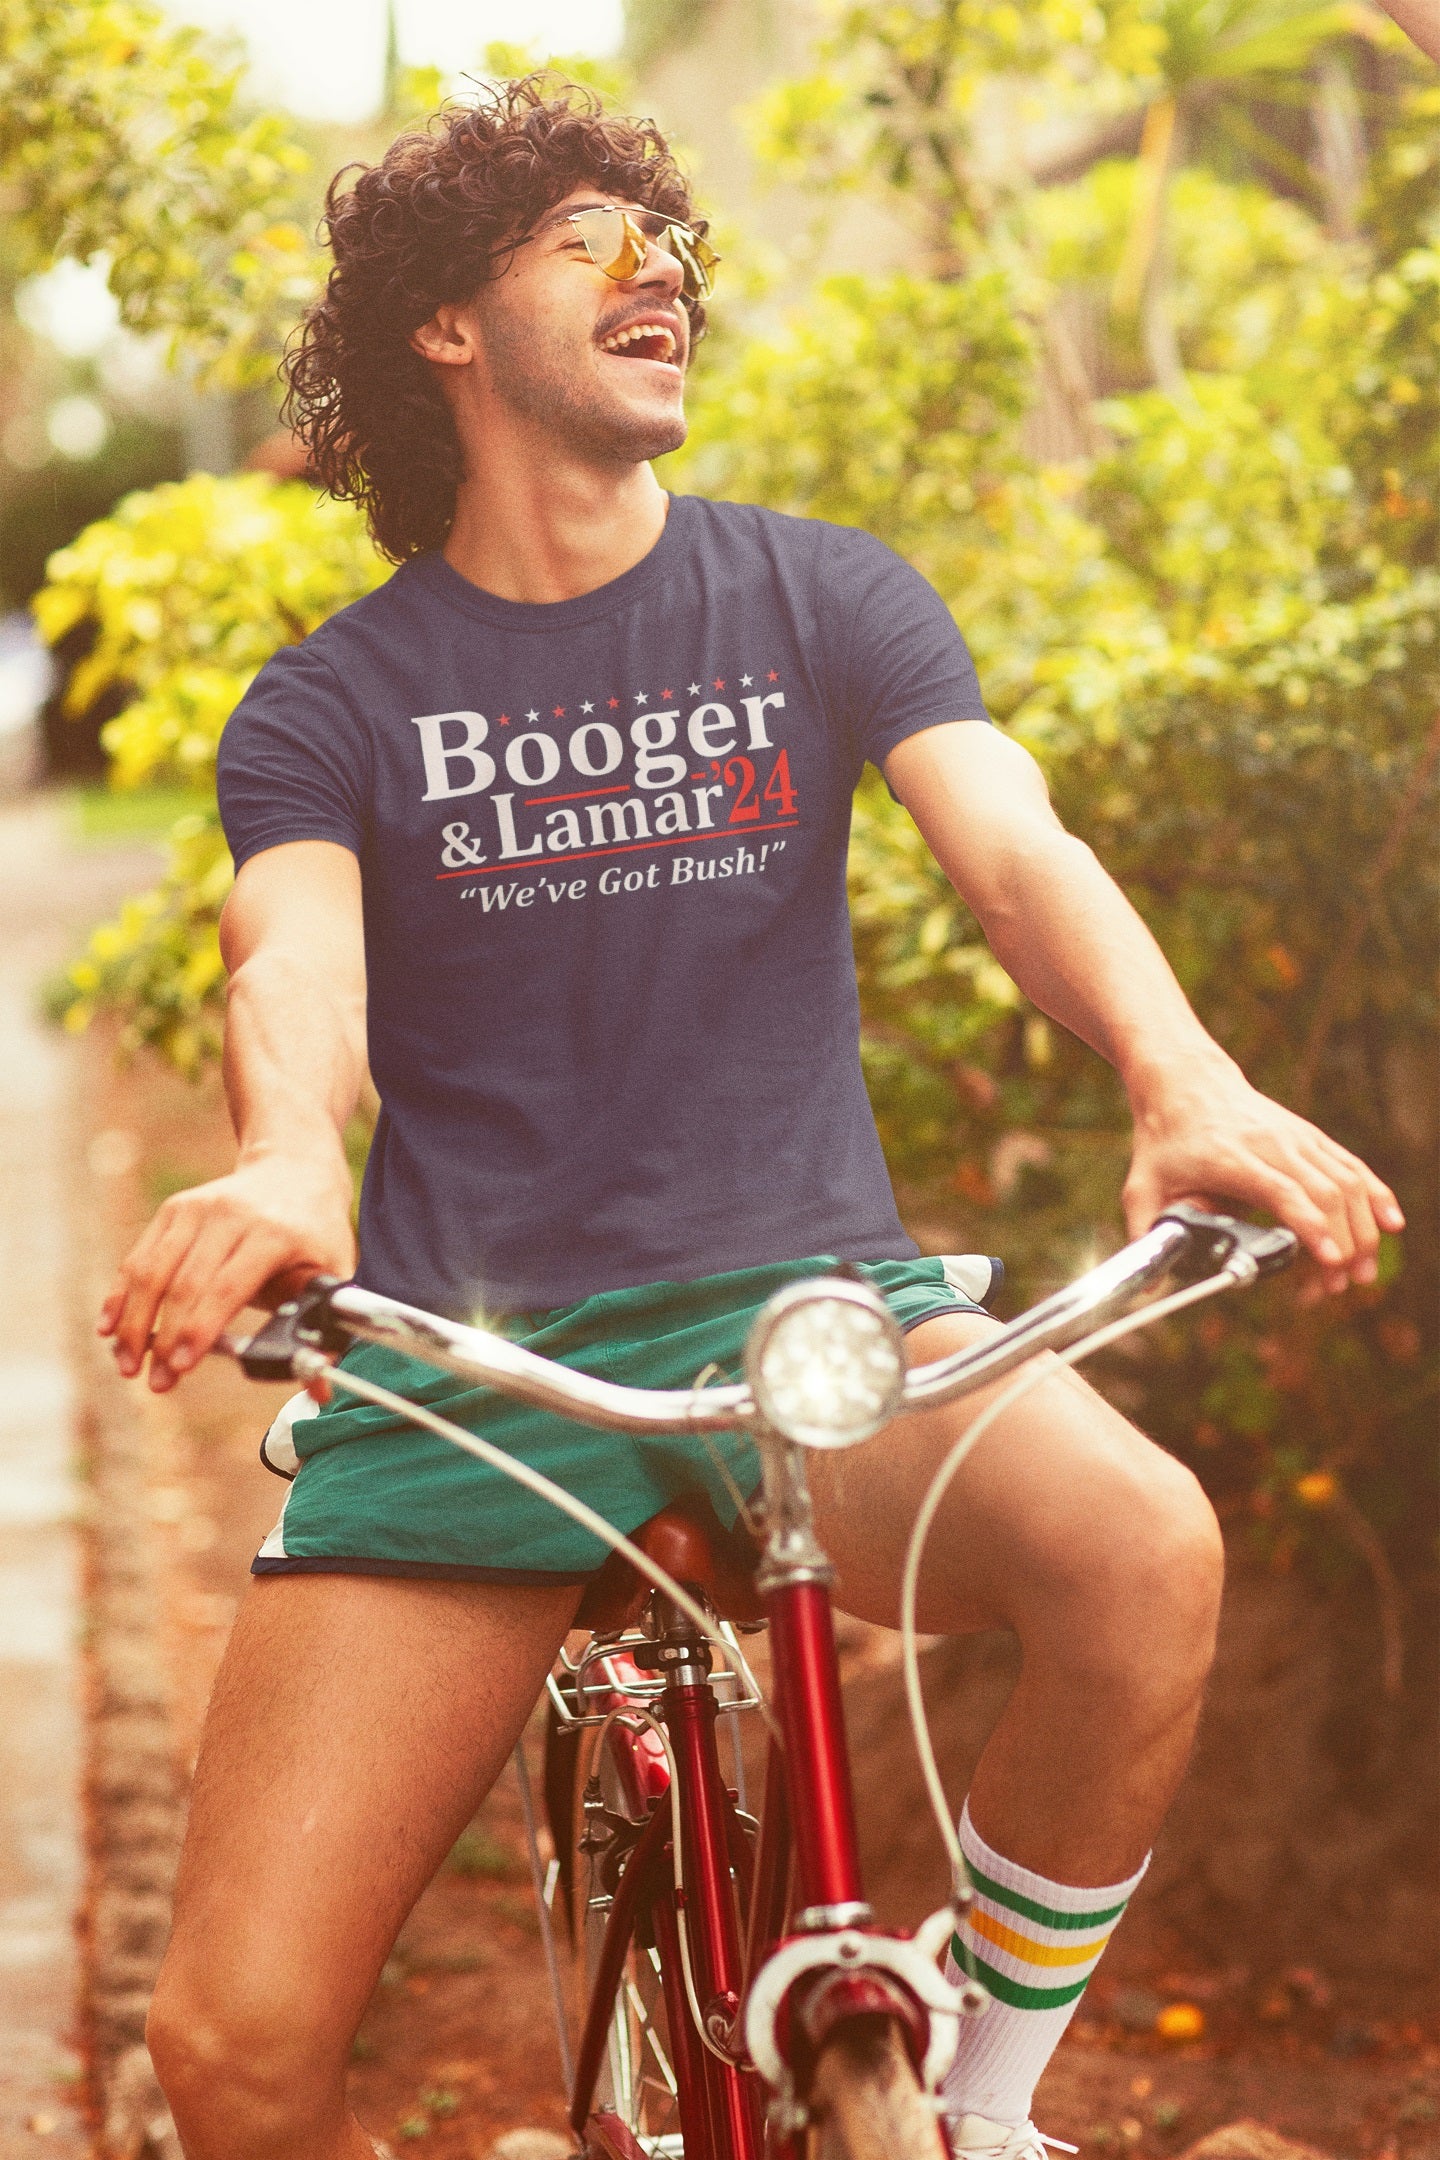 Booger and Lamar 2024 Election Tshirt - Donkey Tees